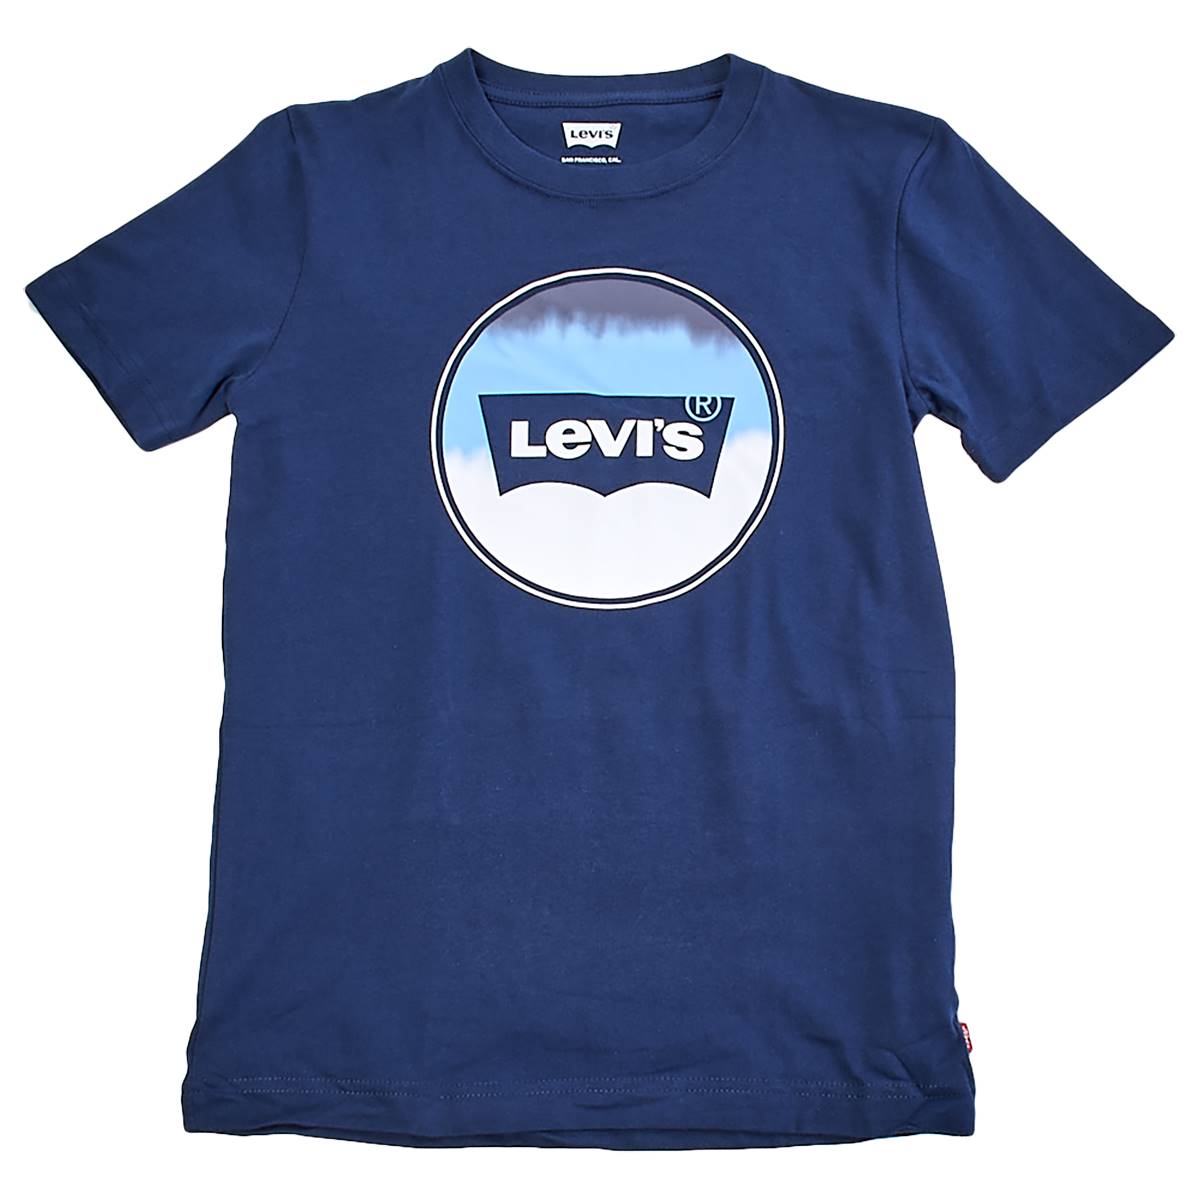 Boys (8-20) Levi's(R) Short Sleeve Graphic Tee - Blue